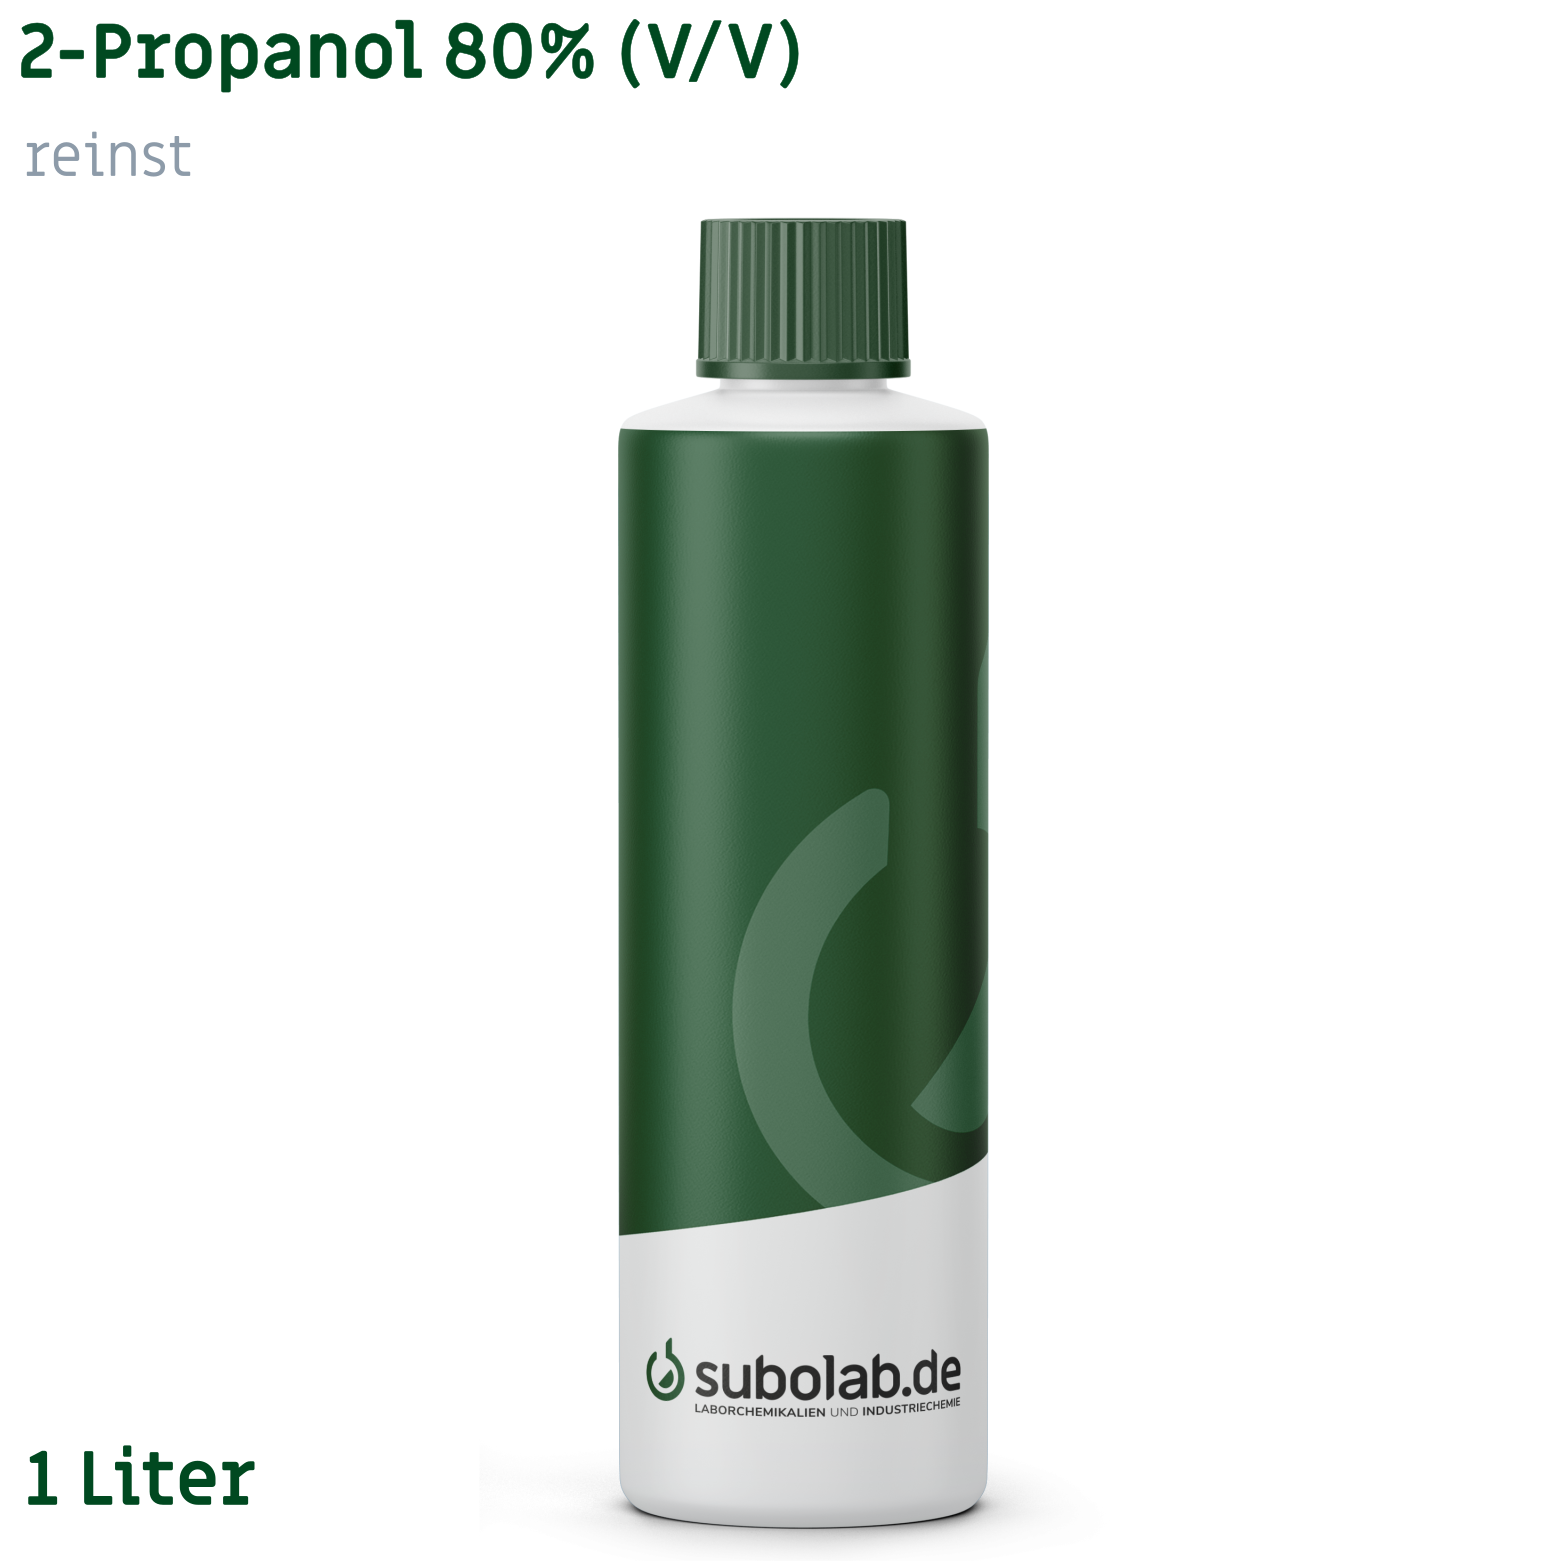 Bild von 2-Propanol 80% (V/V) reinst (1 Liter)